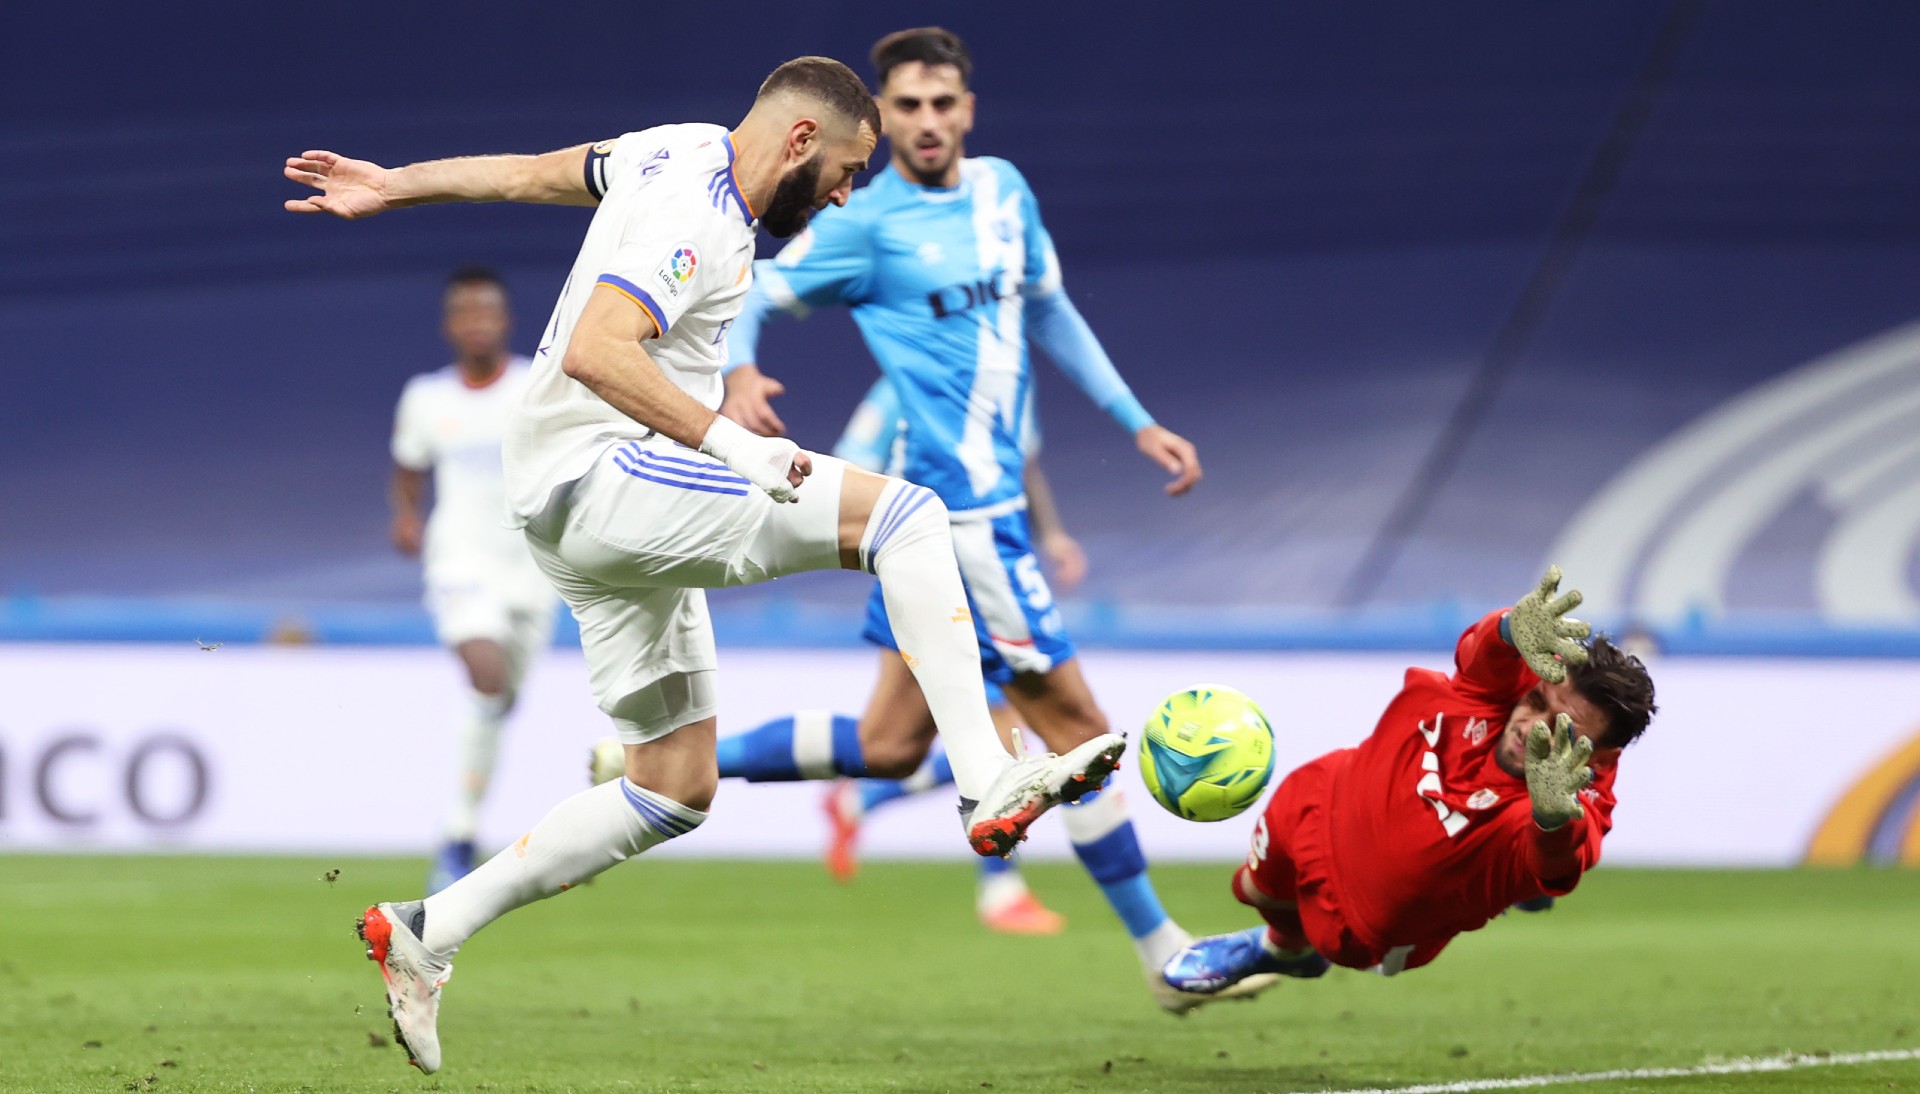 WATCH: Karim Benzema doubles Real Madrid’s lead over Rayo Vallecano